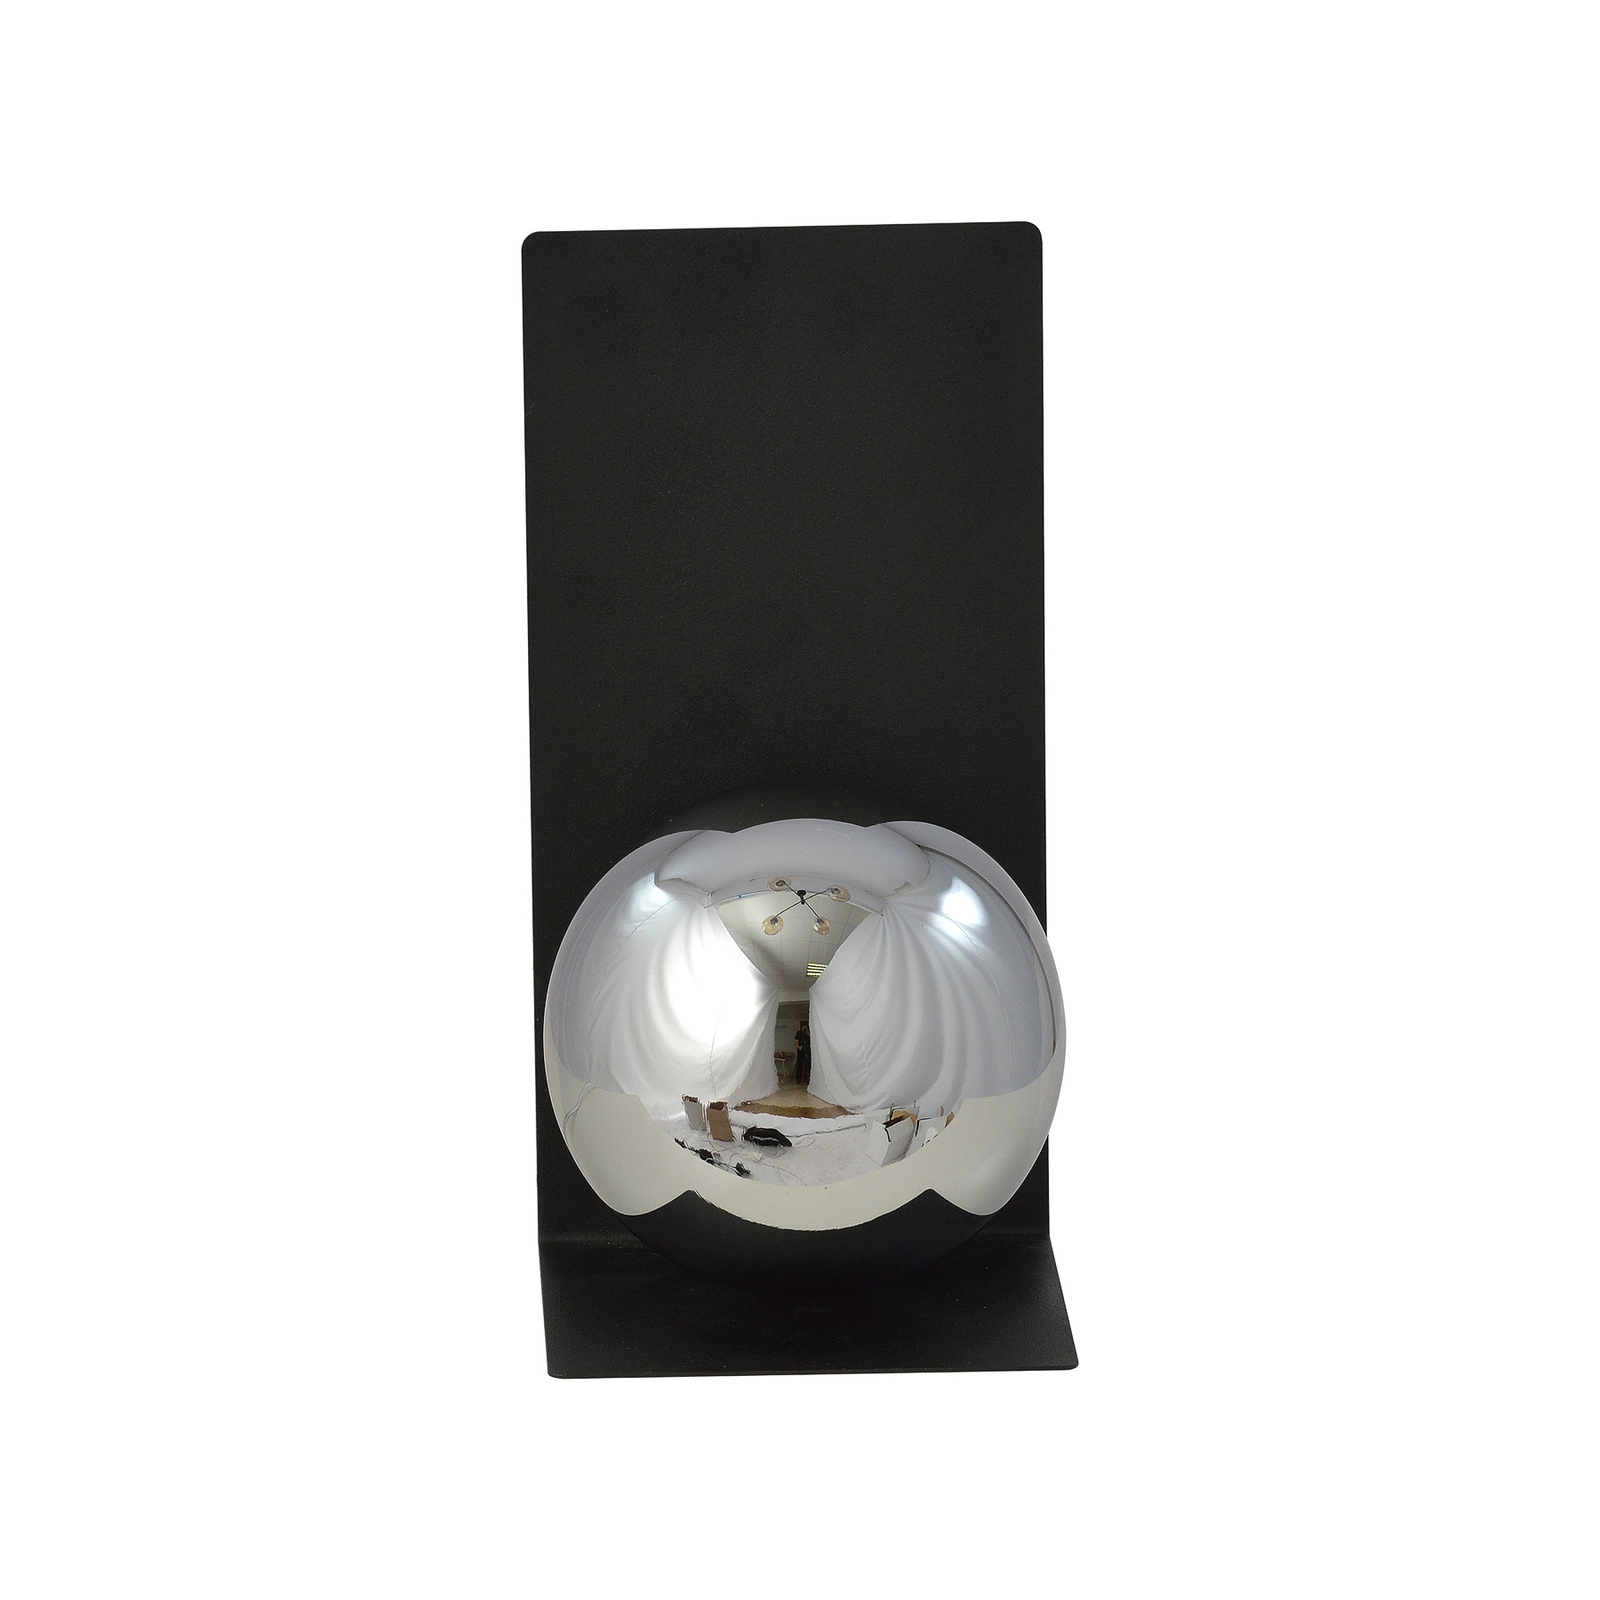 Wandlampe Form 6, 15 cm x 30 cm, schwarz/grafit